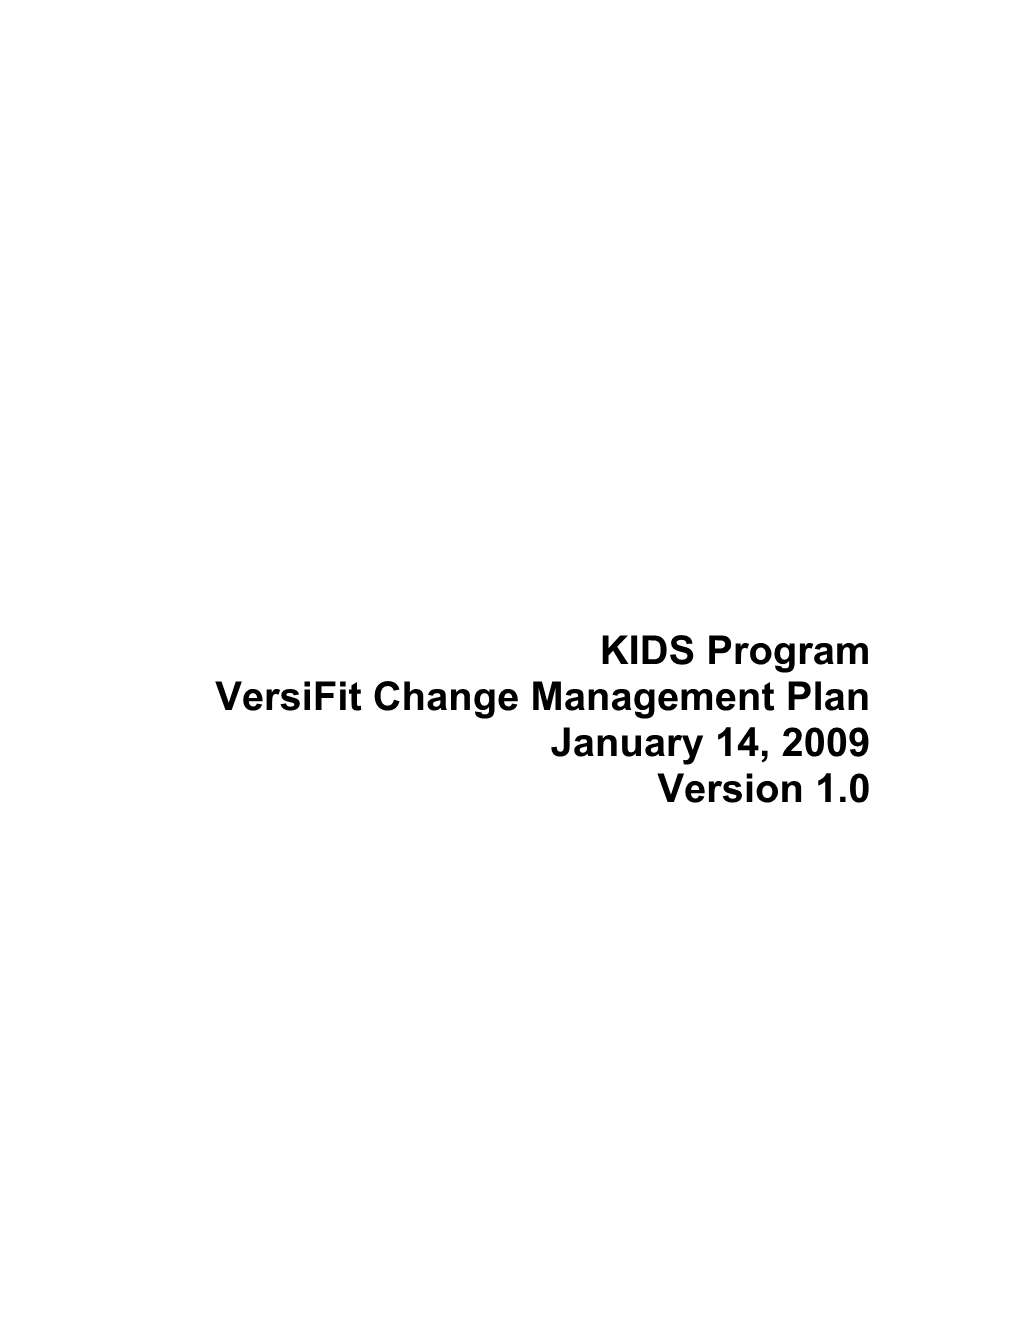 KIDS III Change Management Plan January 14, 2009